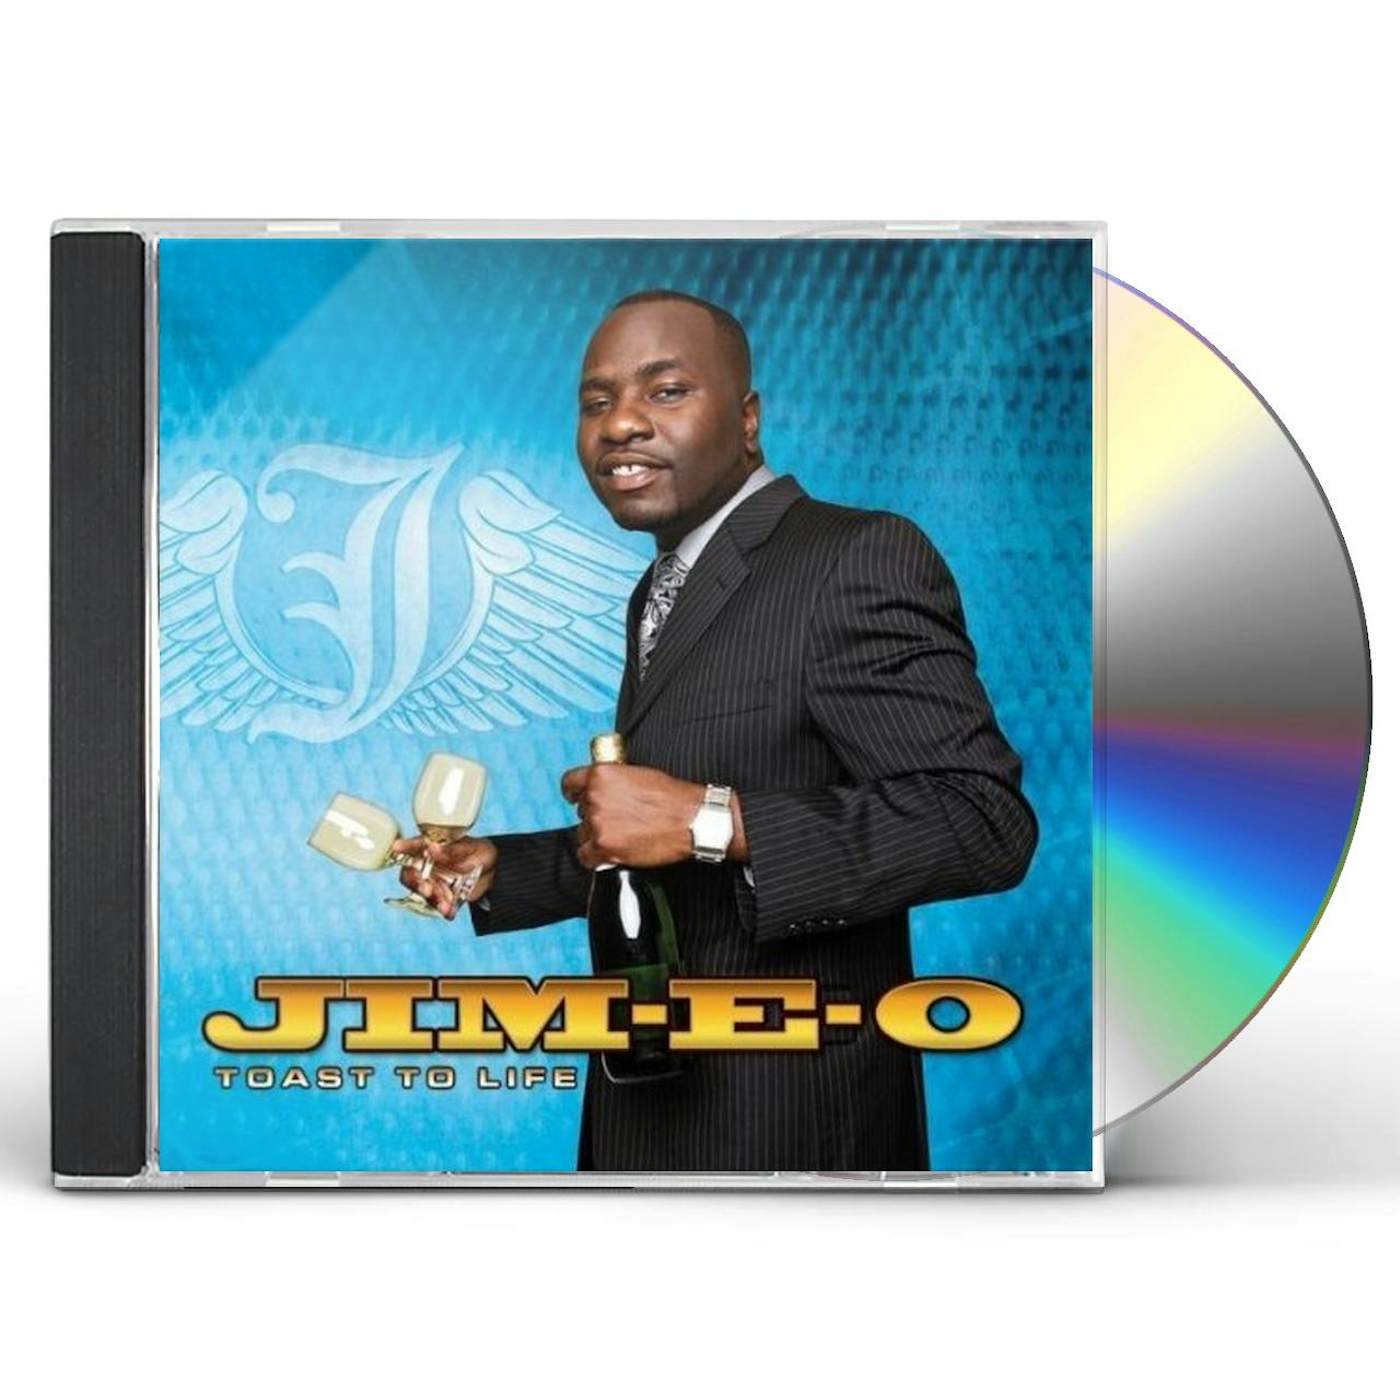 Jim-E-O TOAST TO LIFE CD